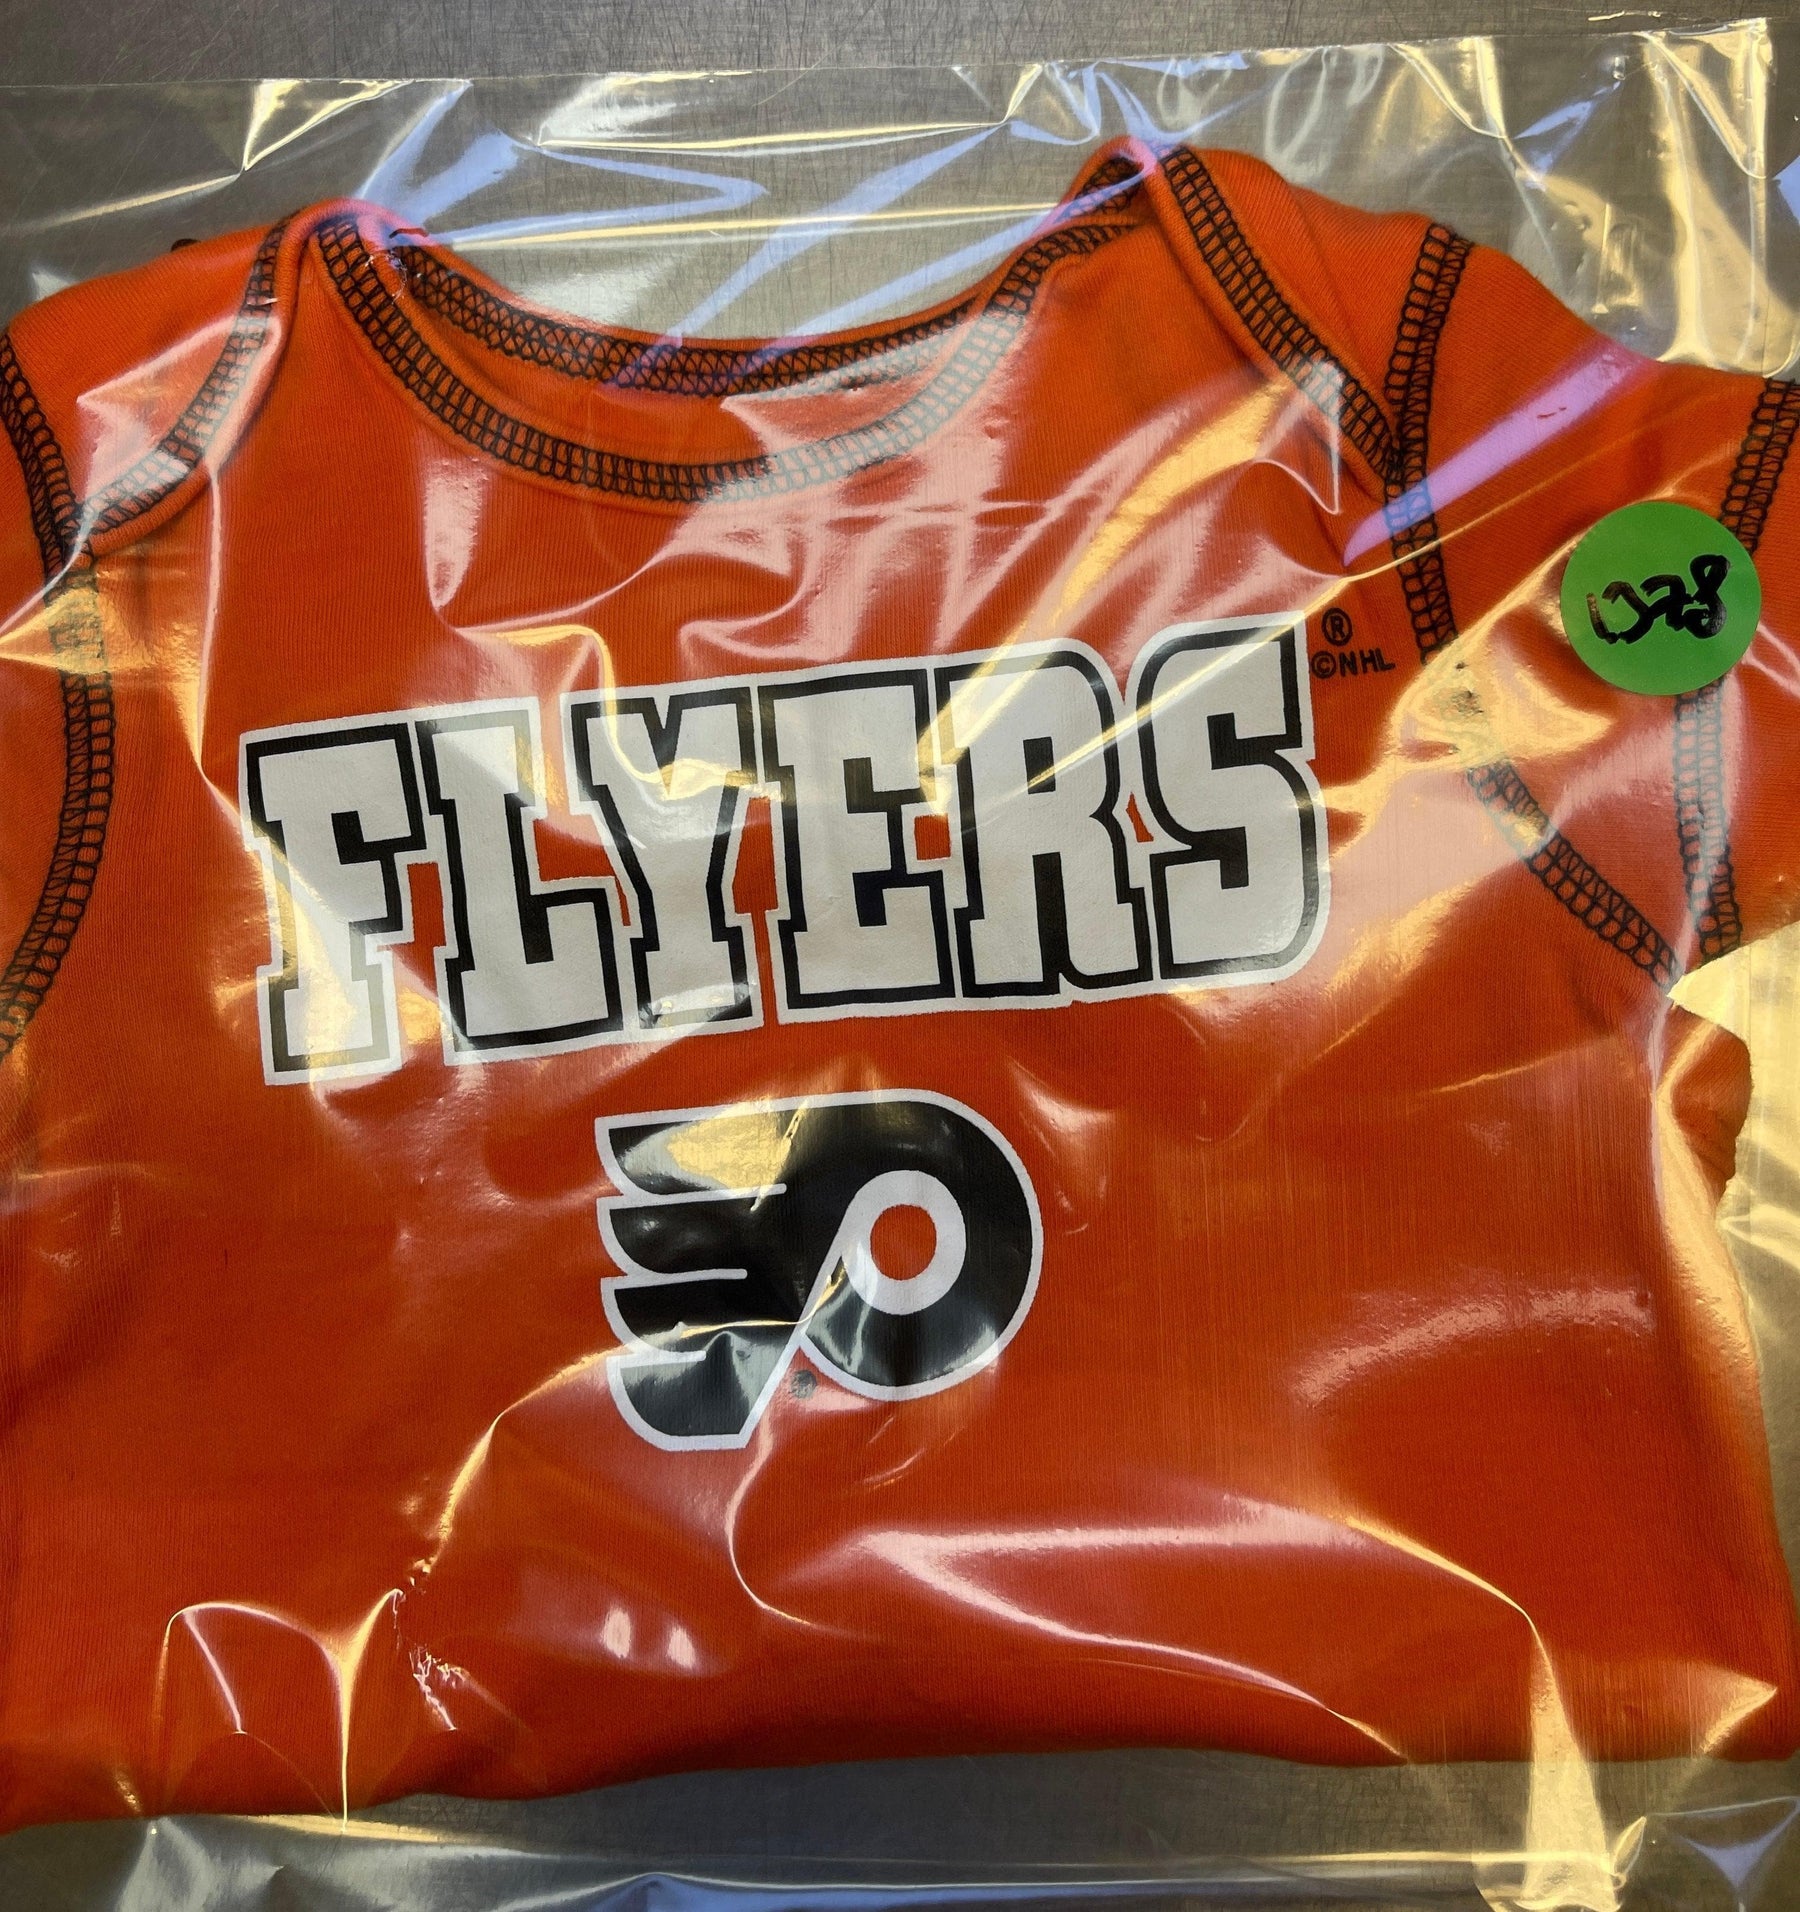 NHL Philadelphia Flyers Orange Bodysuit 3-6 months